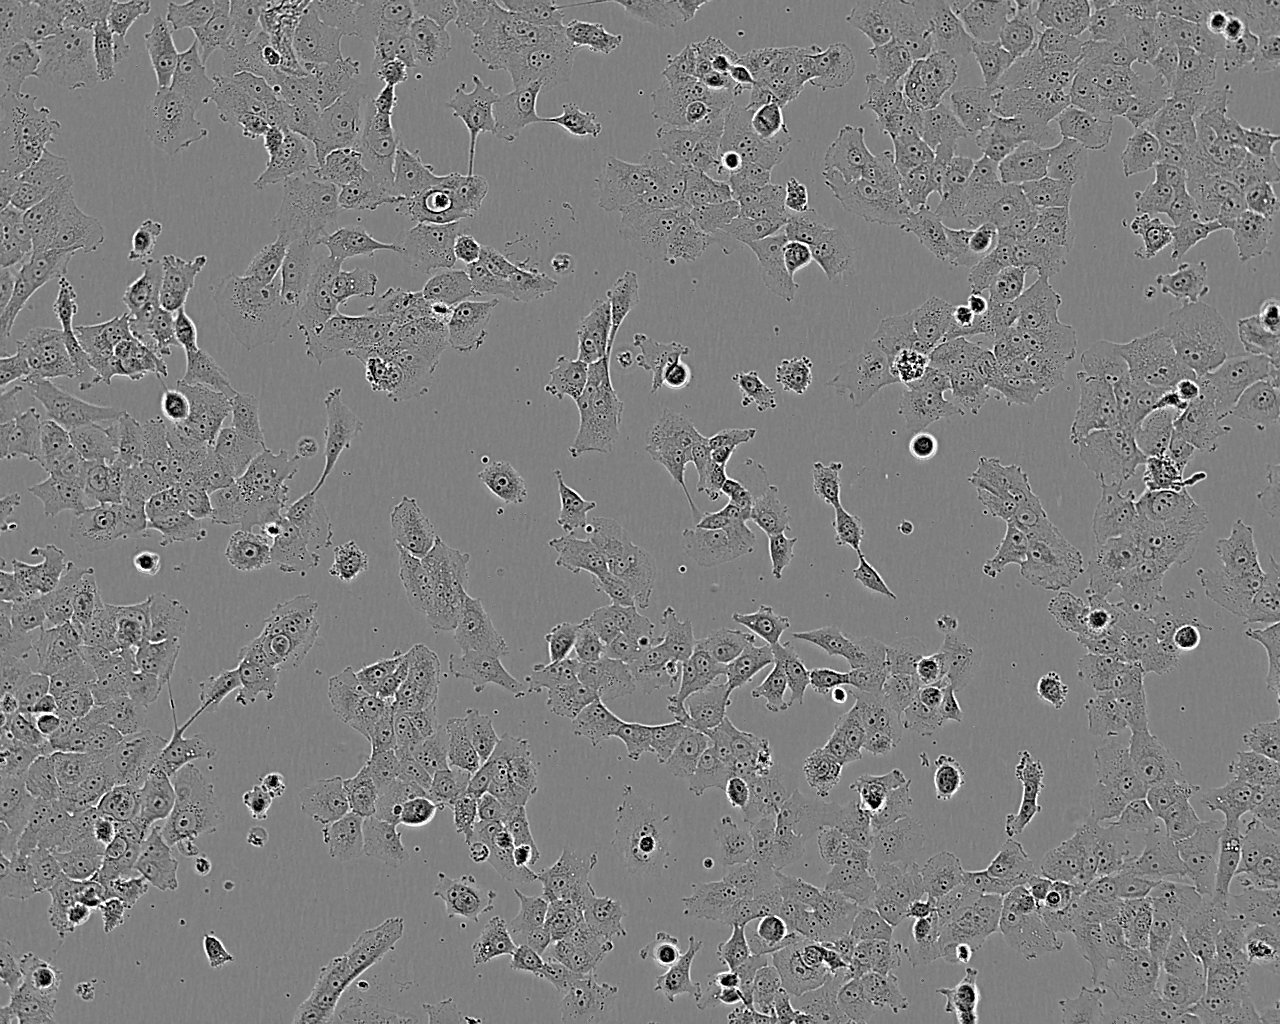 SLK epithelioid cells卡波西肉瘤细胞系,SLK epithelioid cells